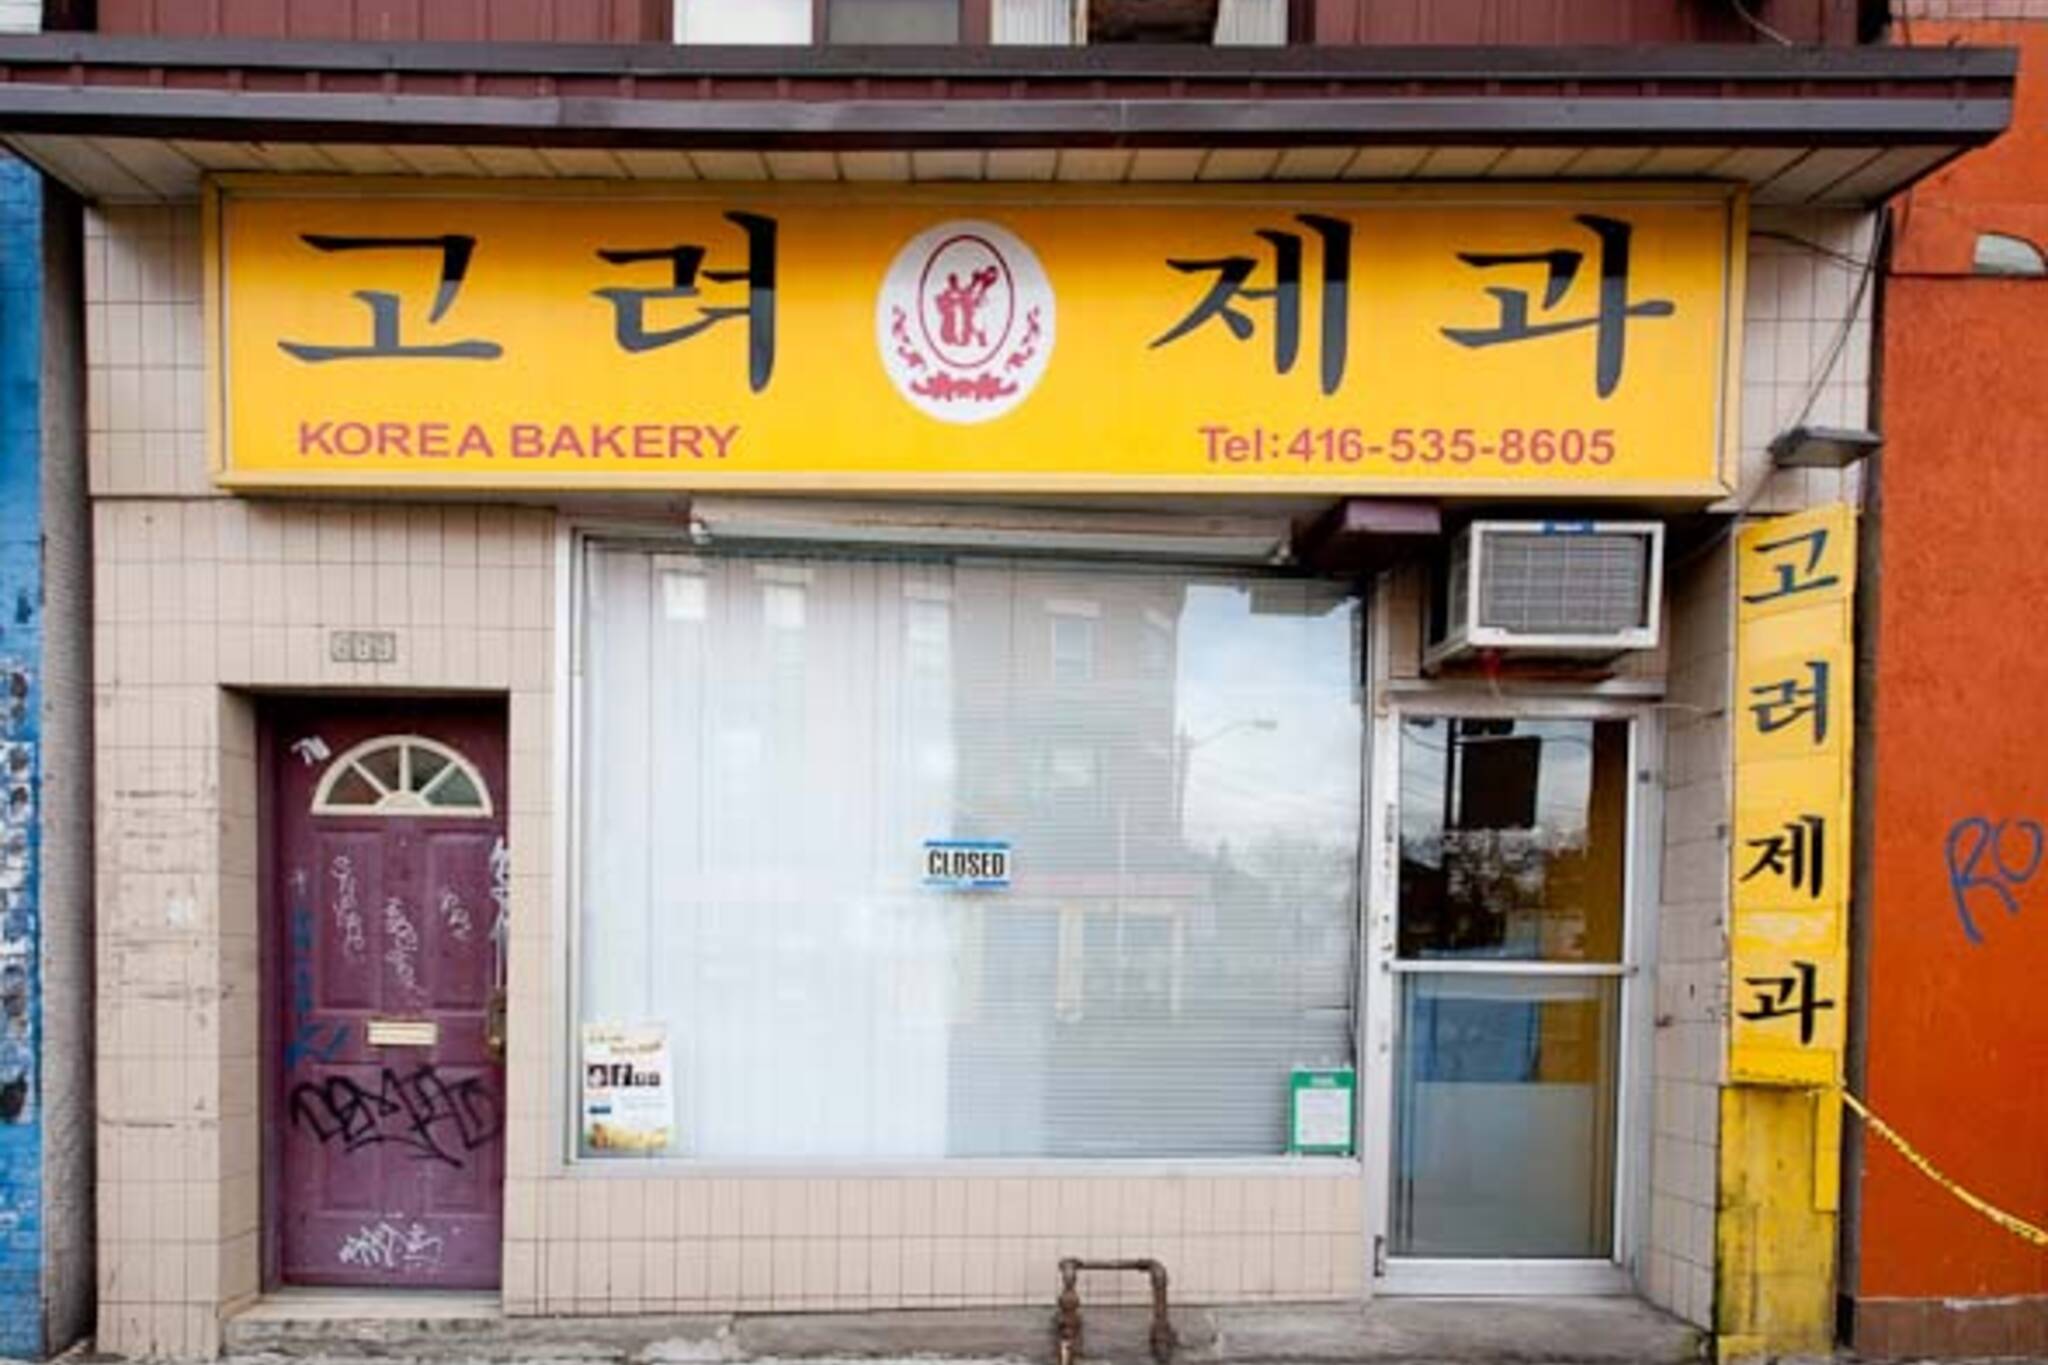 Korea Bakery